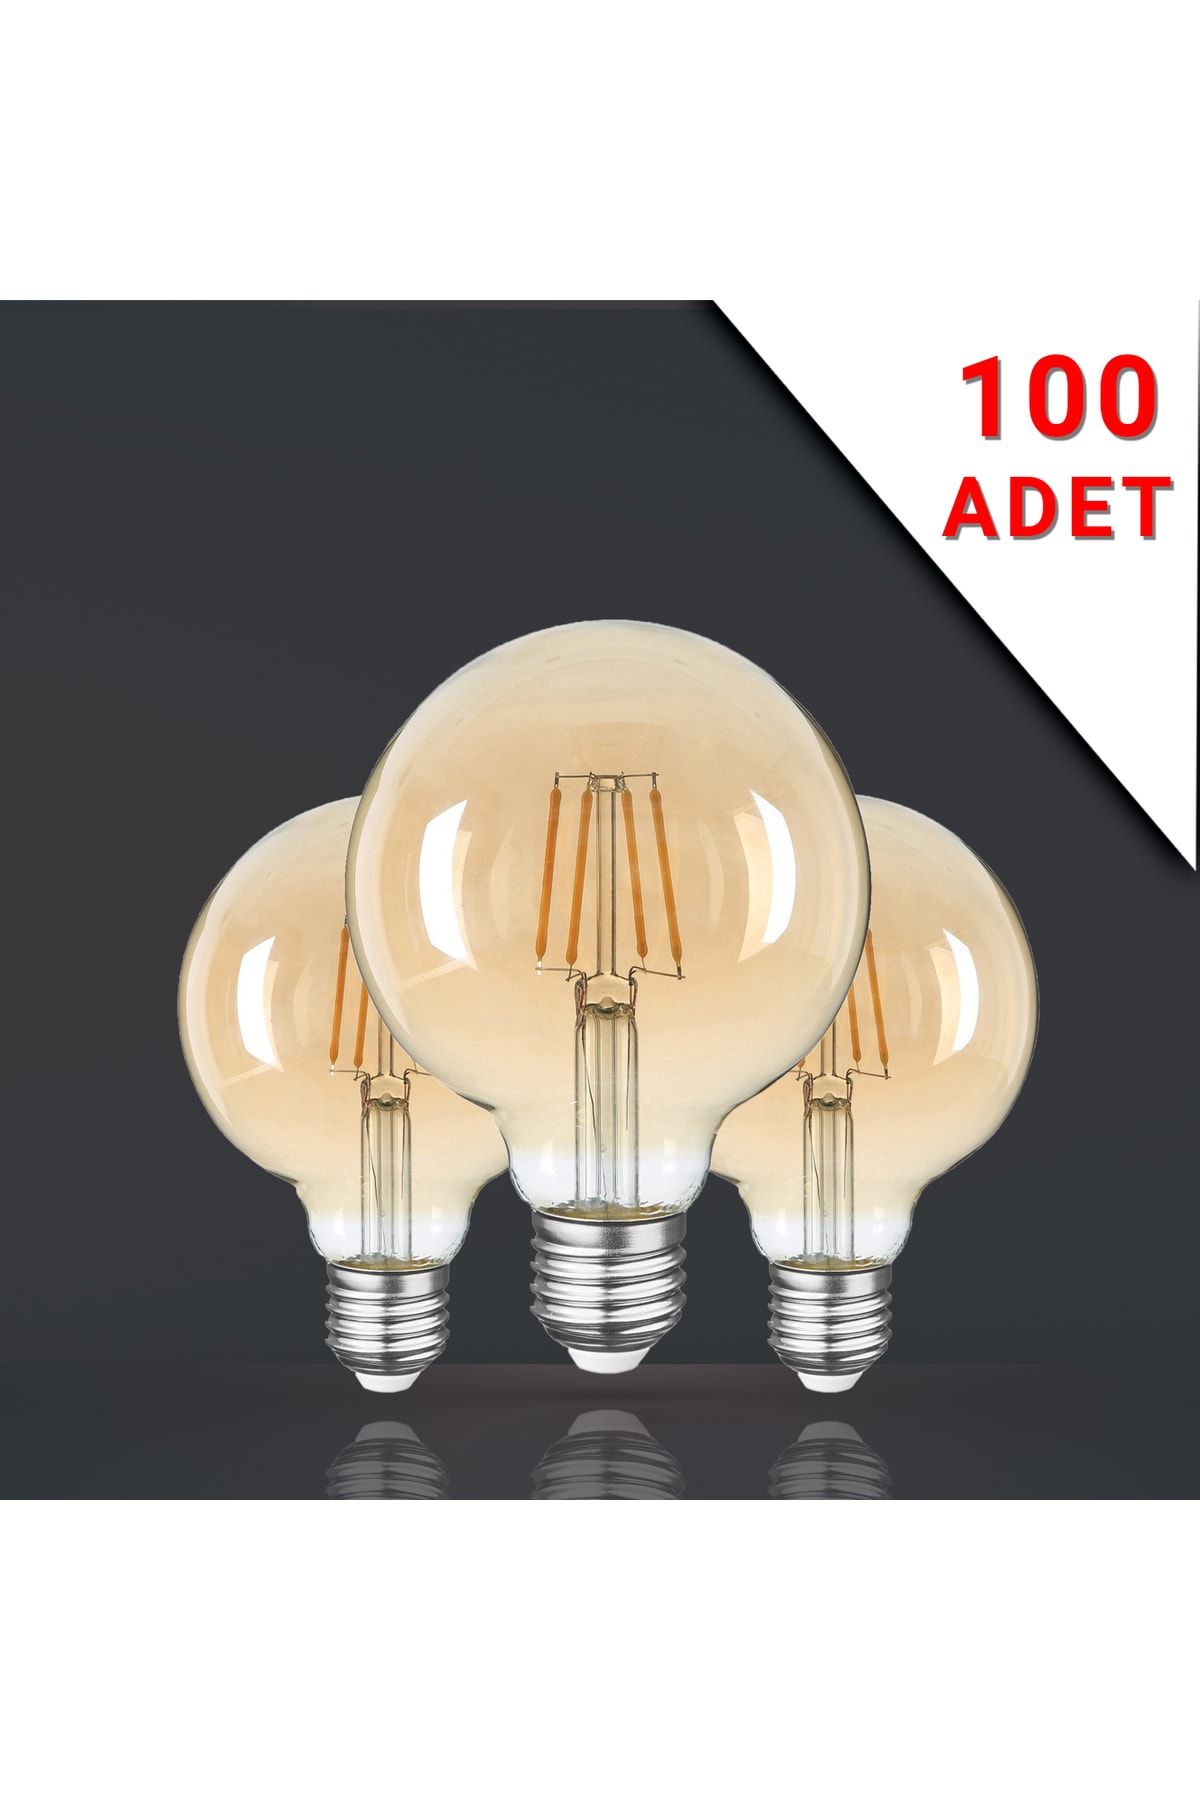 Apliqa 100 Adet Led Filamanlı E27 Rustik Ampul 6 Watt 2500k Gün Işığı G95 12160-100